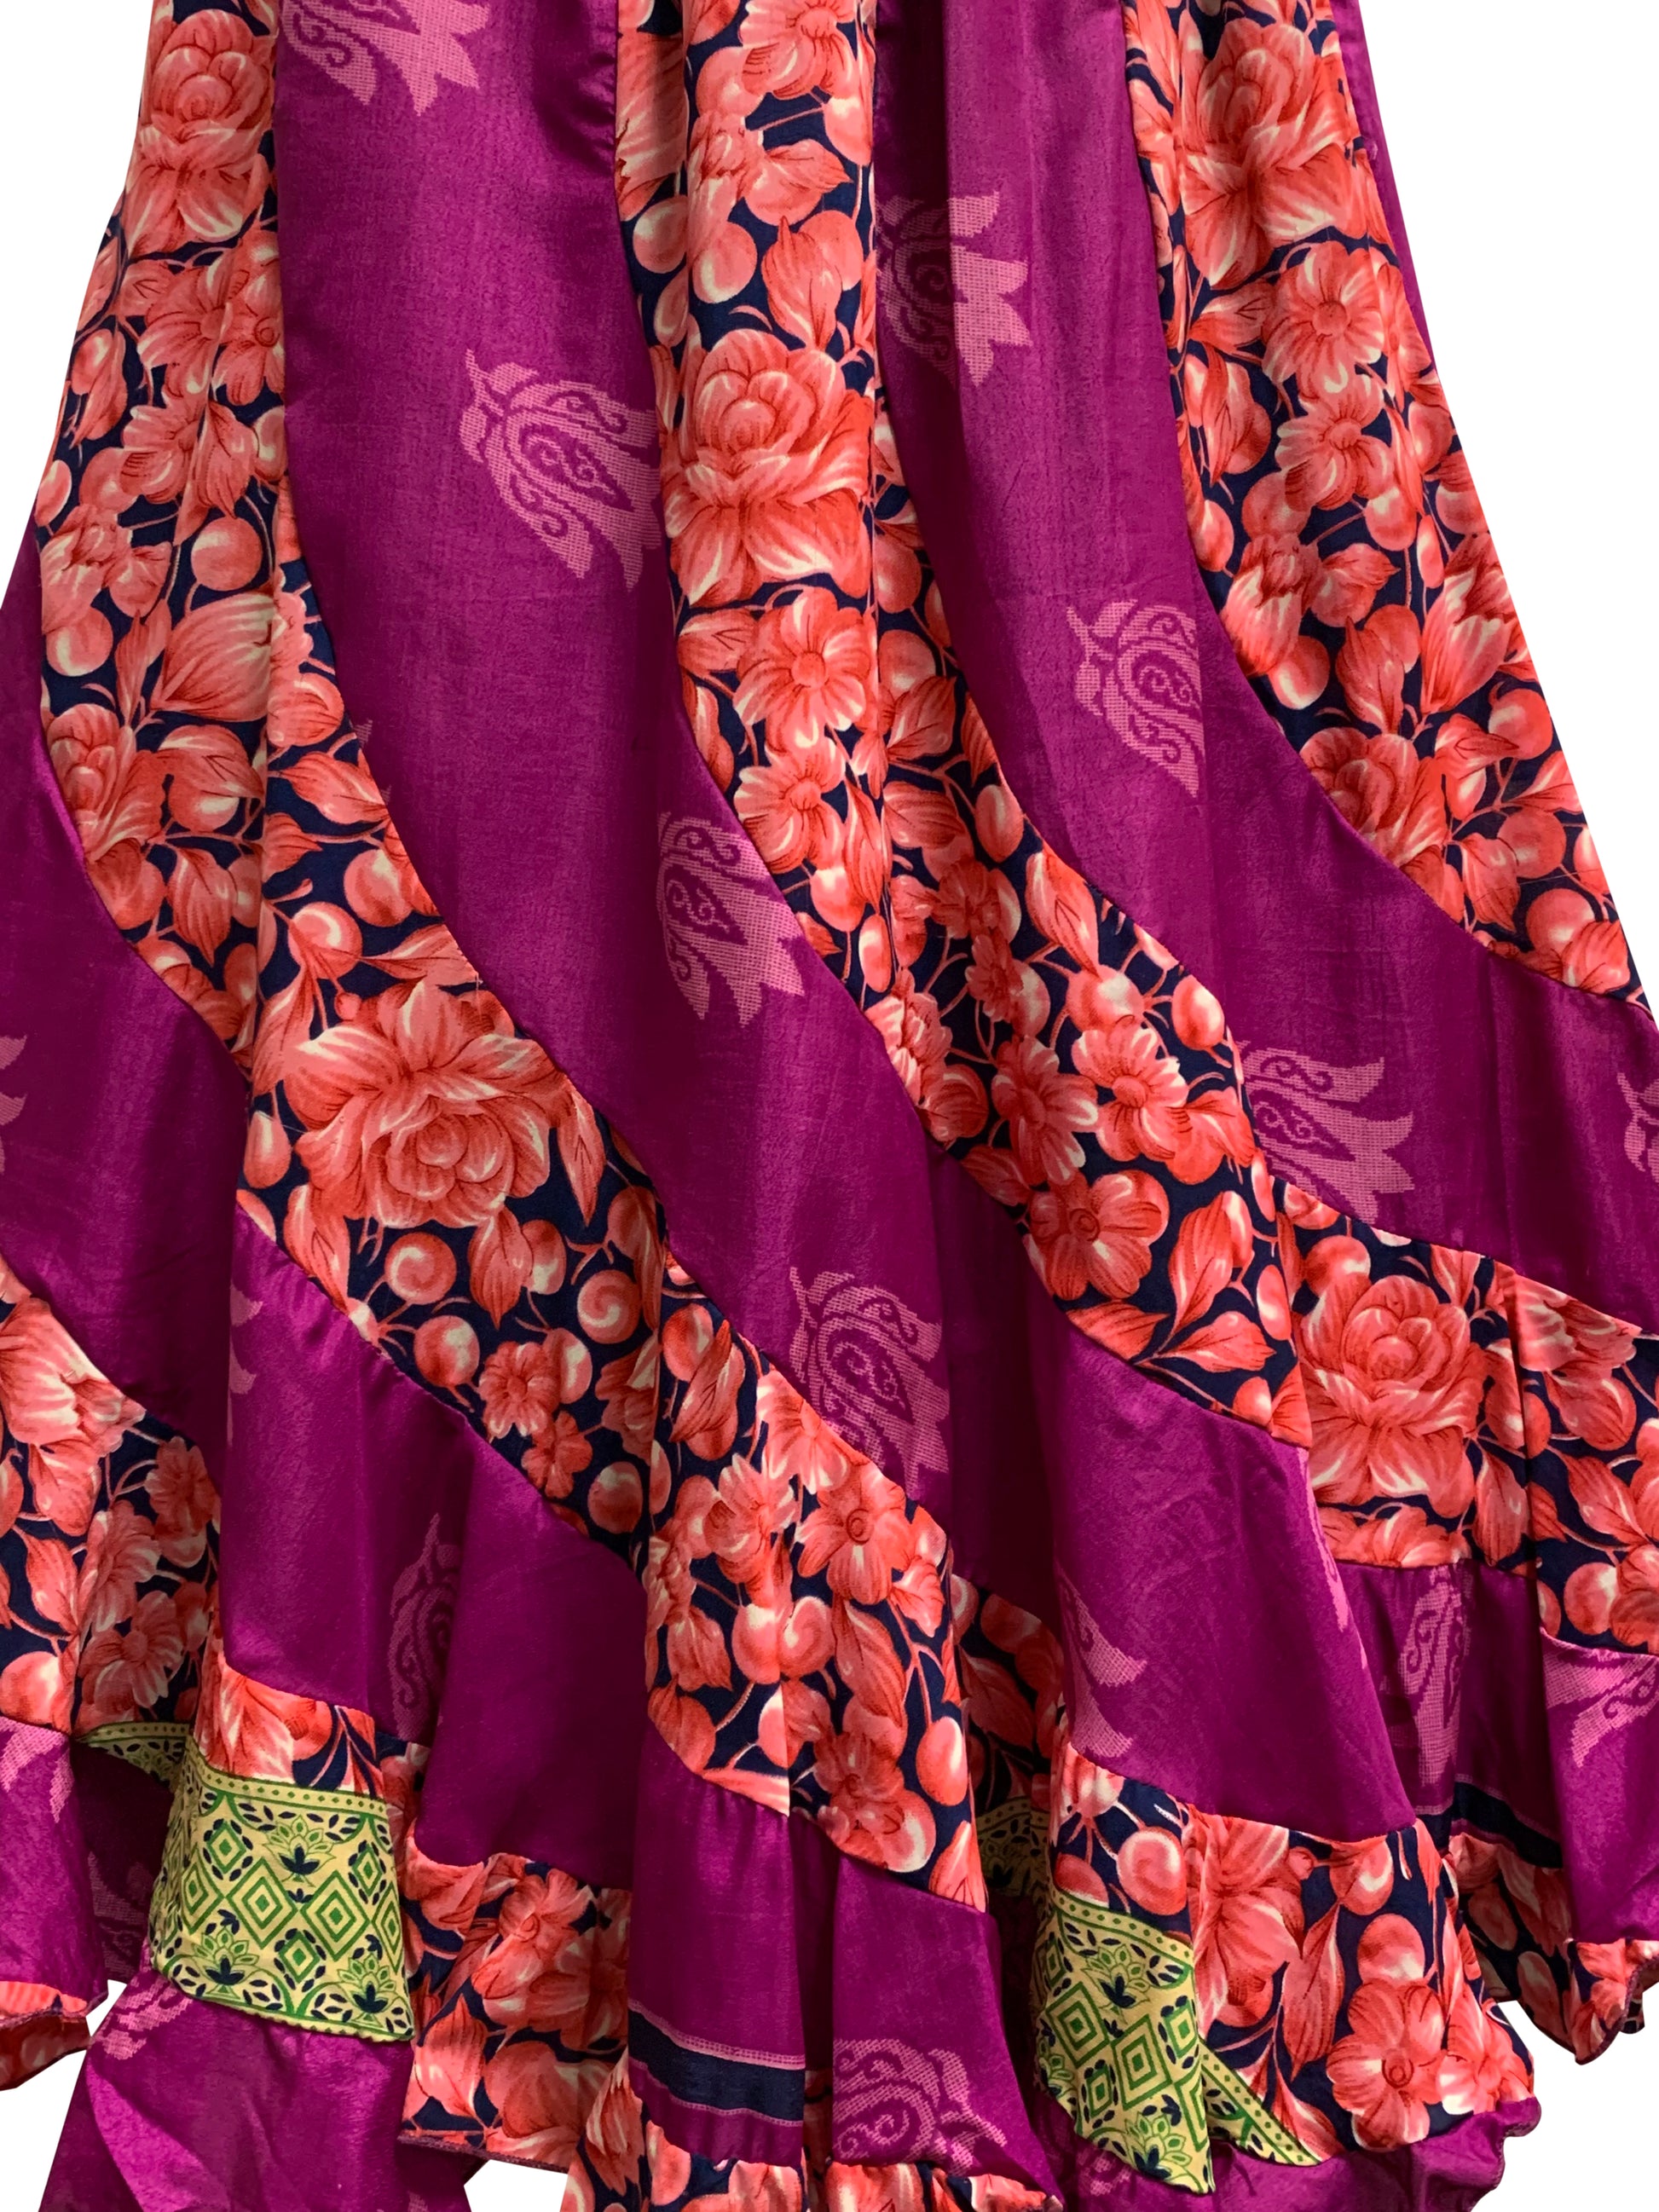 Boho Handmade Patchwork Fair Trade Indian Silk Sari Ruffled Long Skirt - Ambali Fashion Skirts bohemian, boho, casual, classic, ethnic, gypsy, hippie, indian, sixties, traditional, yoga